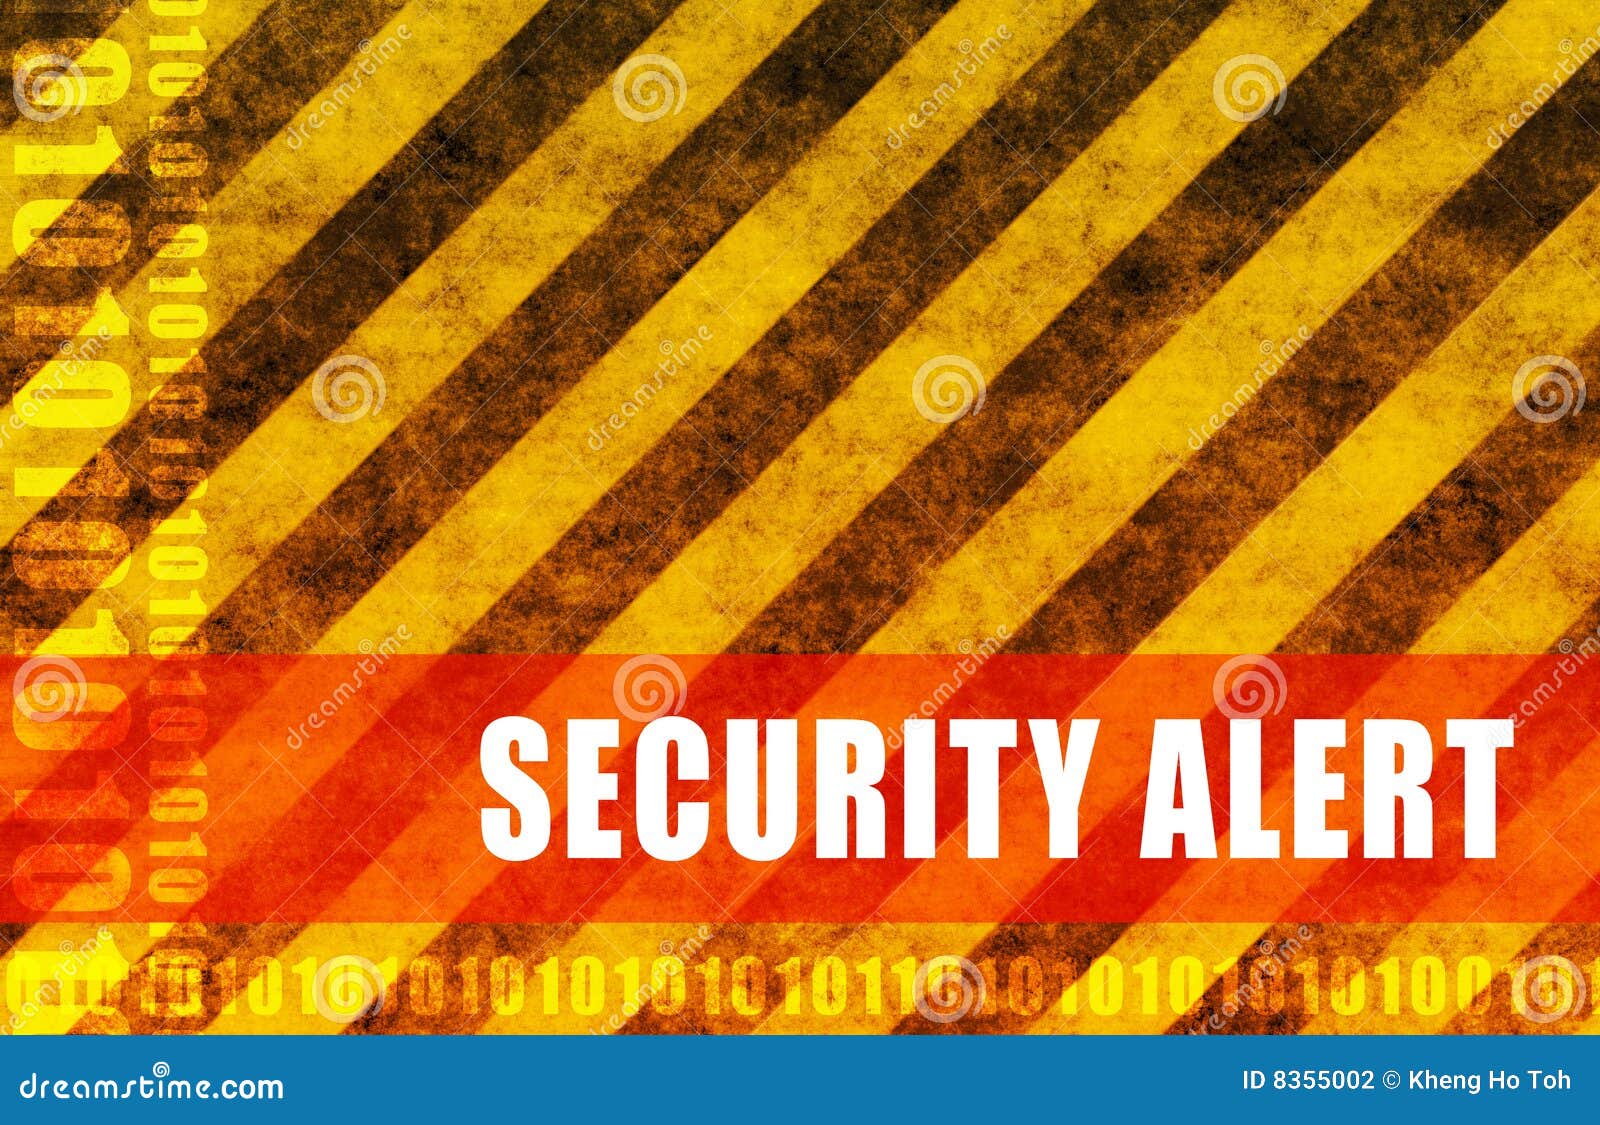 security alert